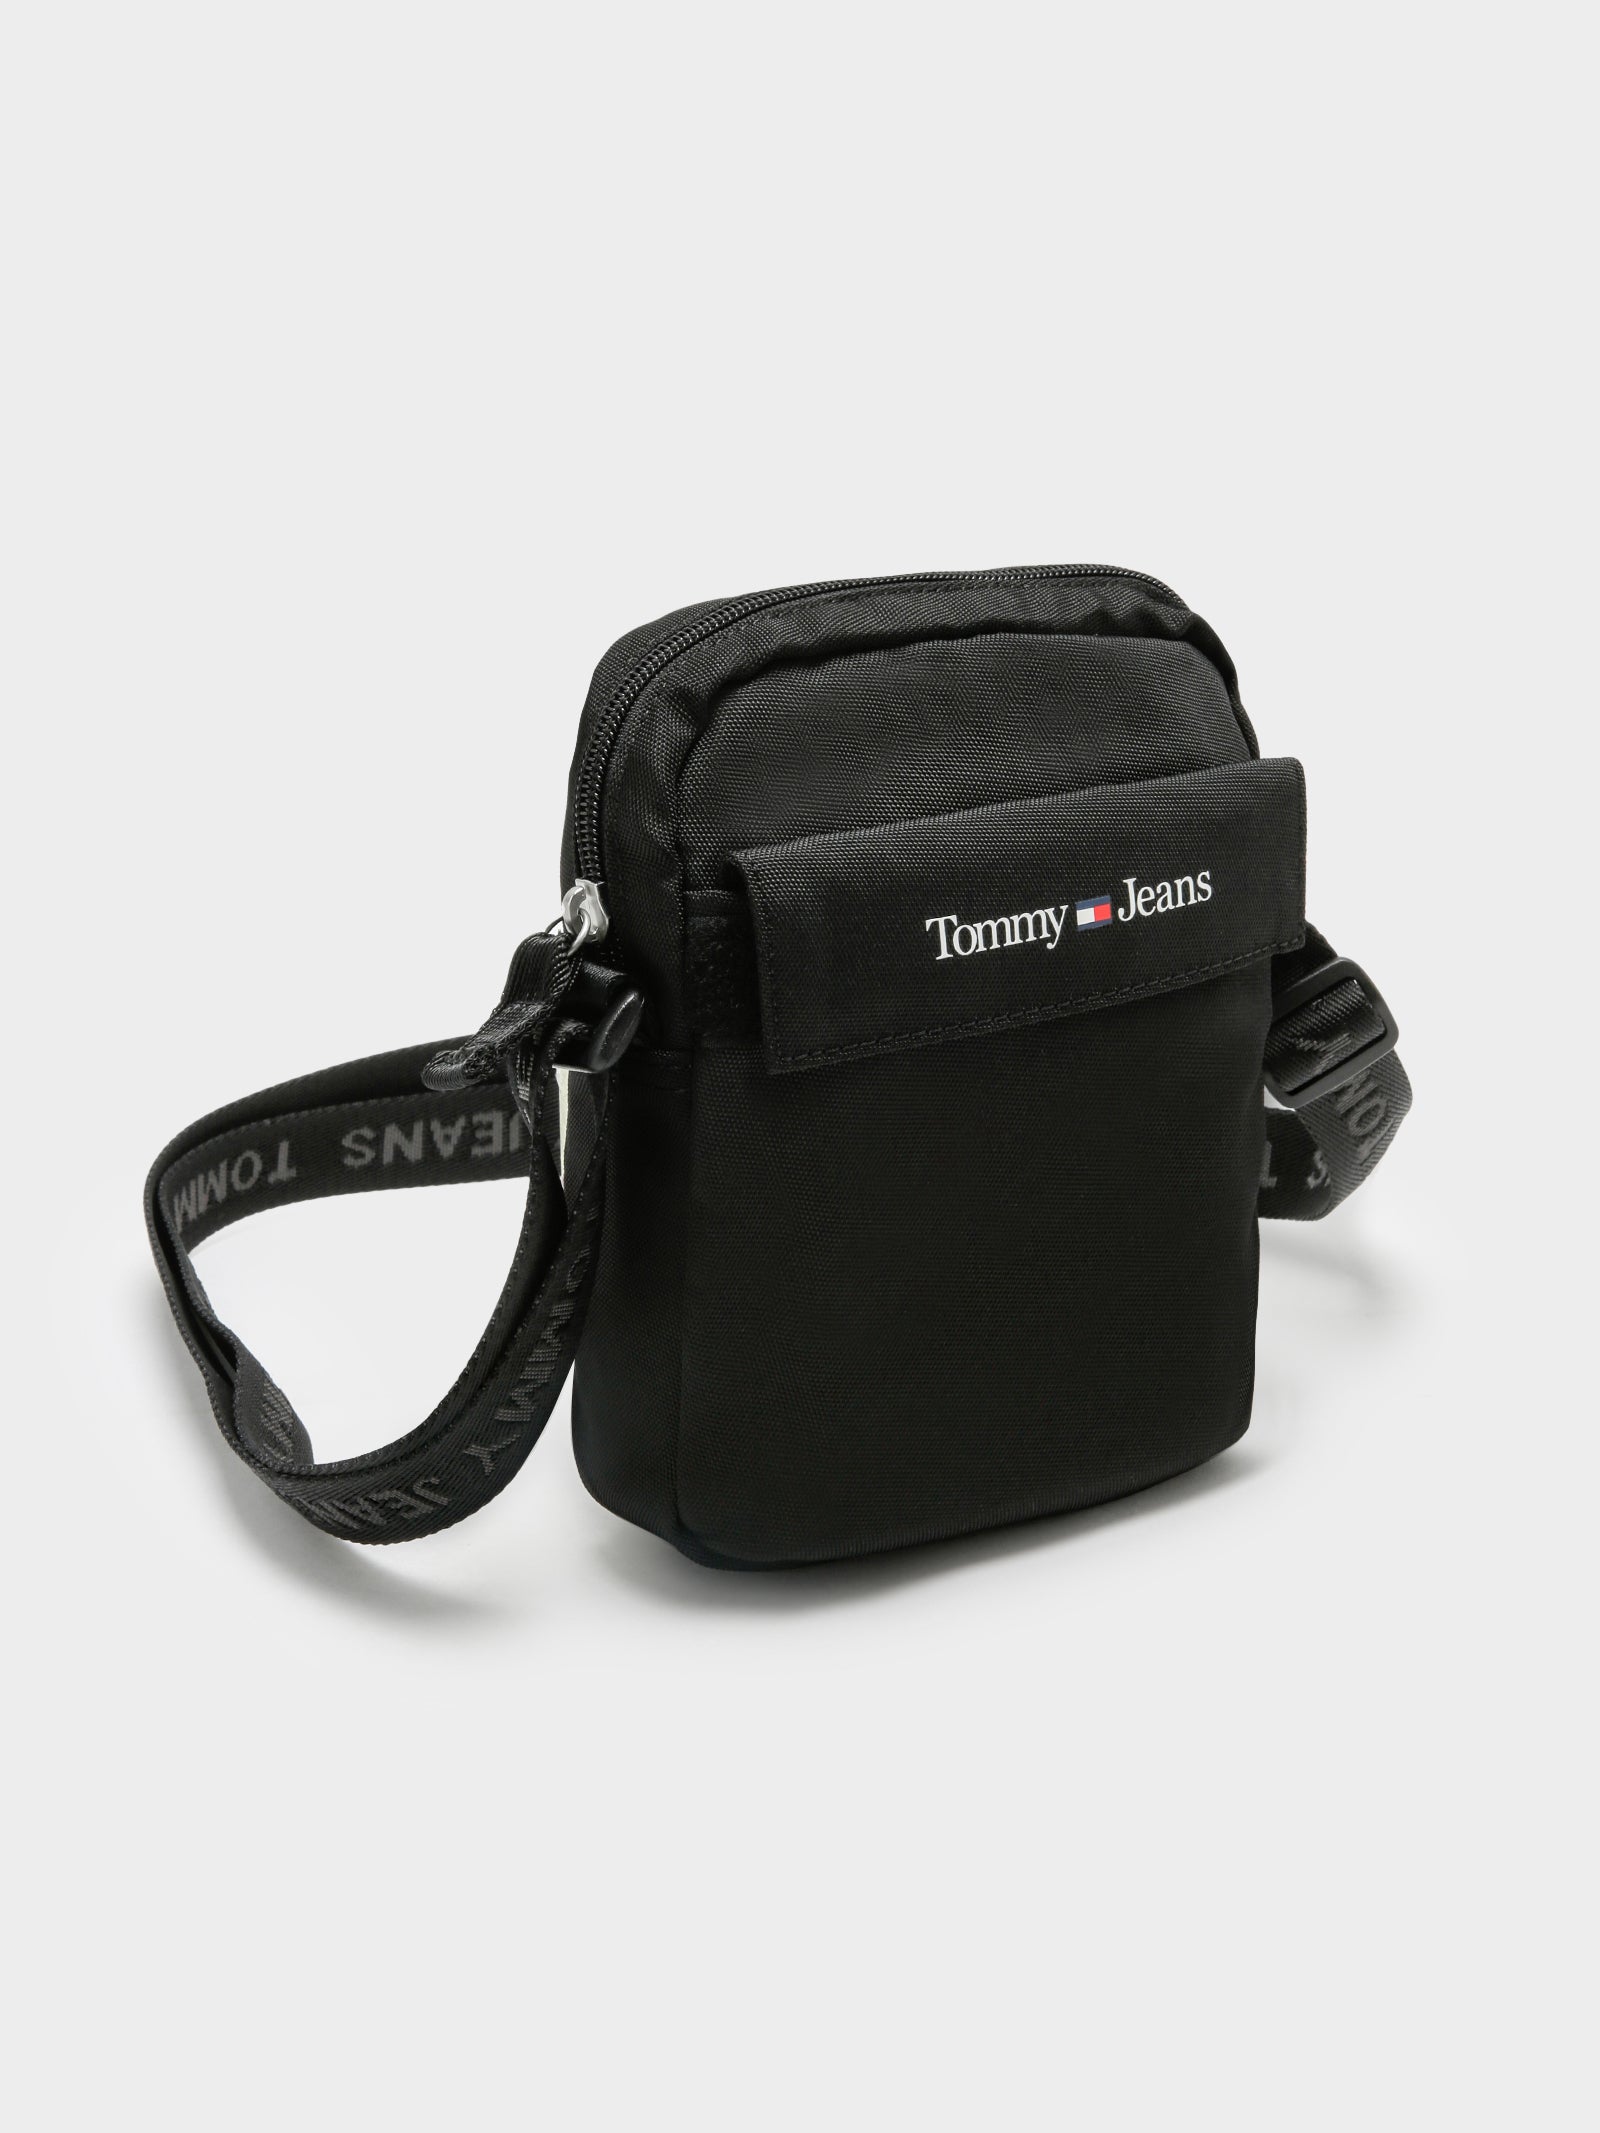 Essential Reporter Bag in Black - Glue Store